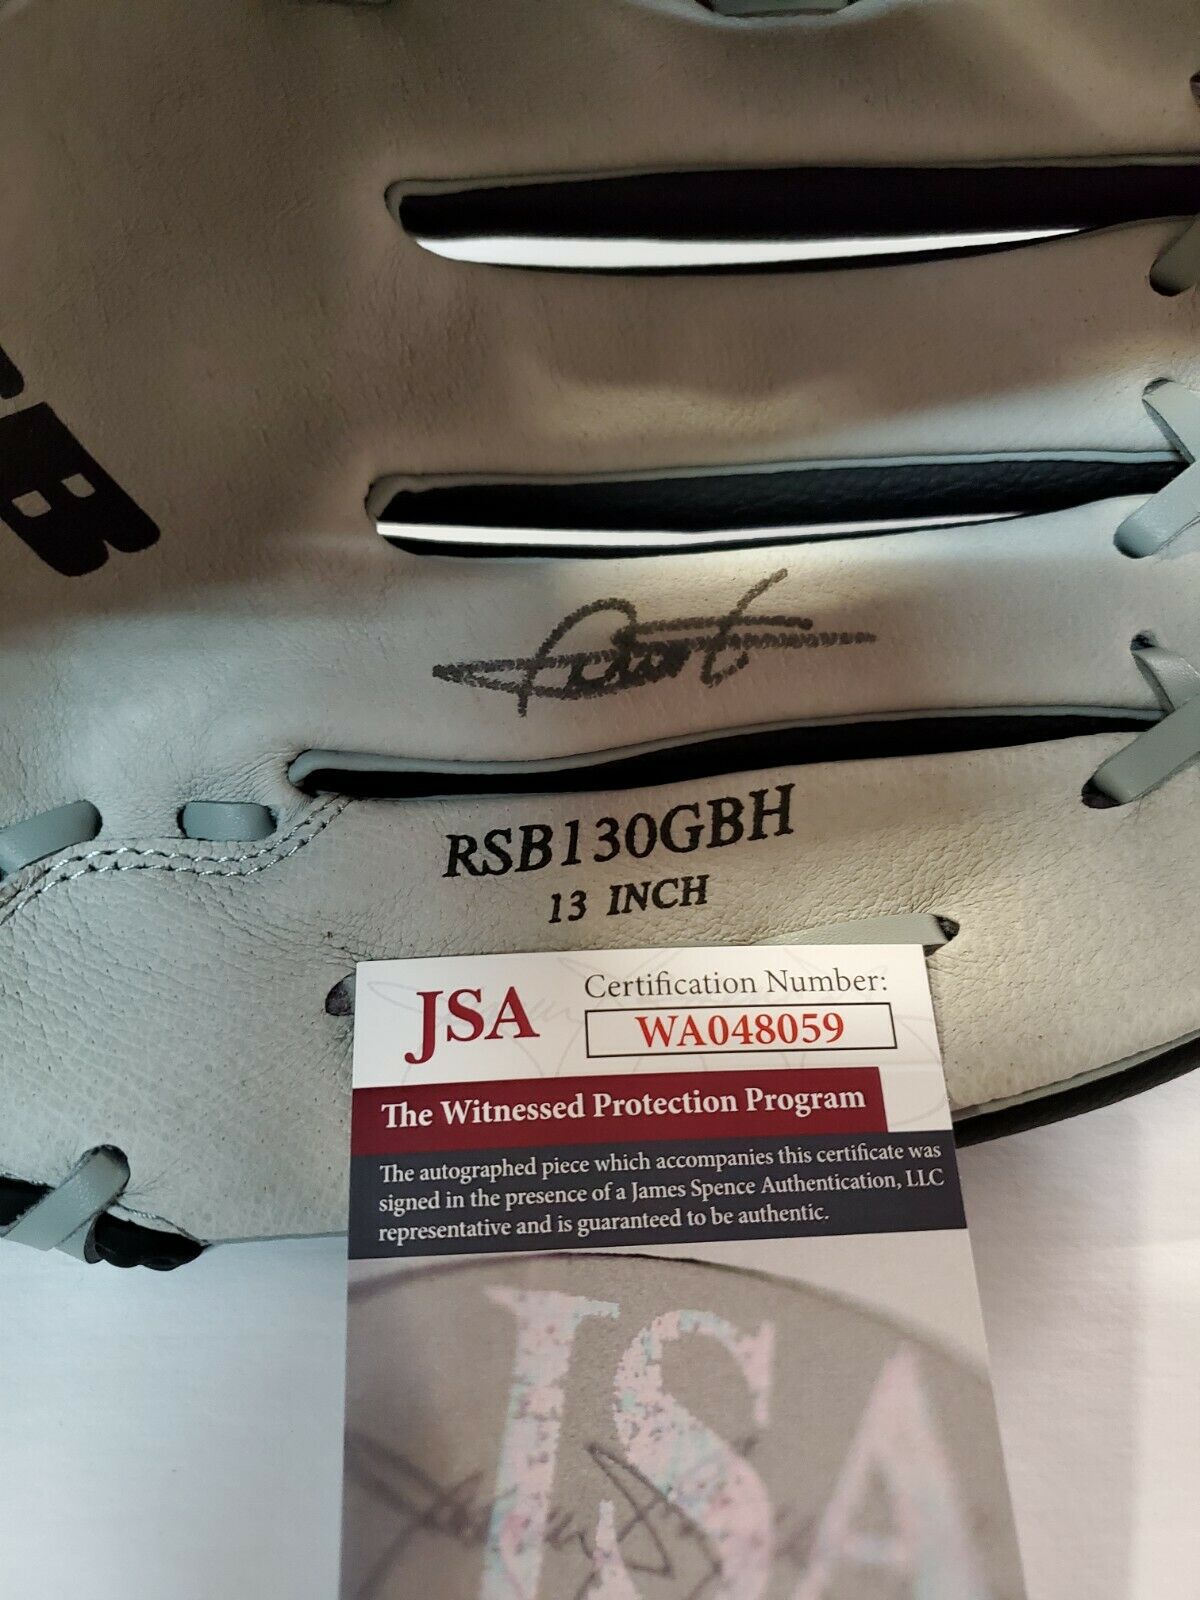 MVP Authentics New York Yankees Deivi Garcia Autographed Signed Glove Jsa Coa 157.50 sports jersey framing , jersey framing